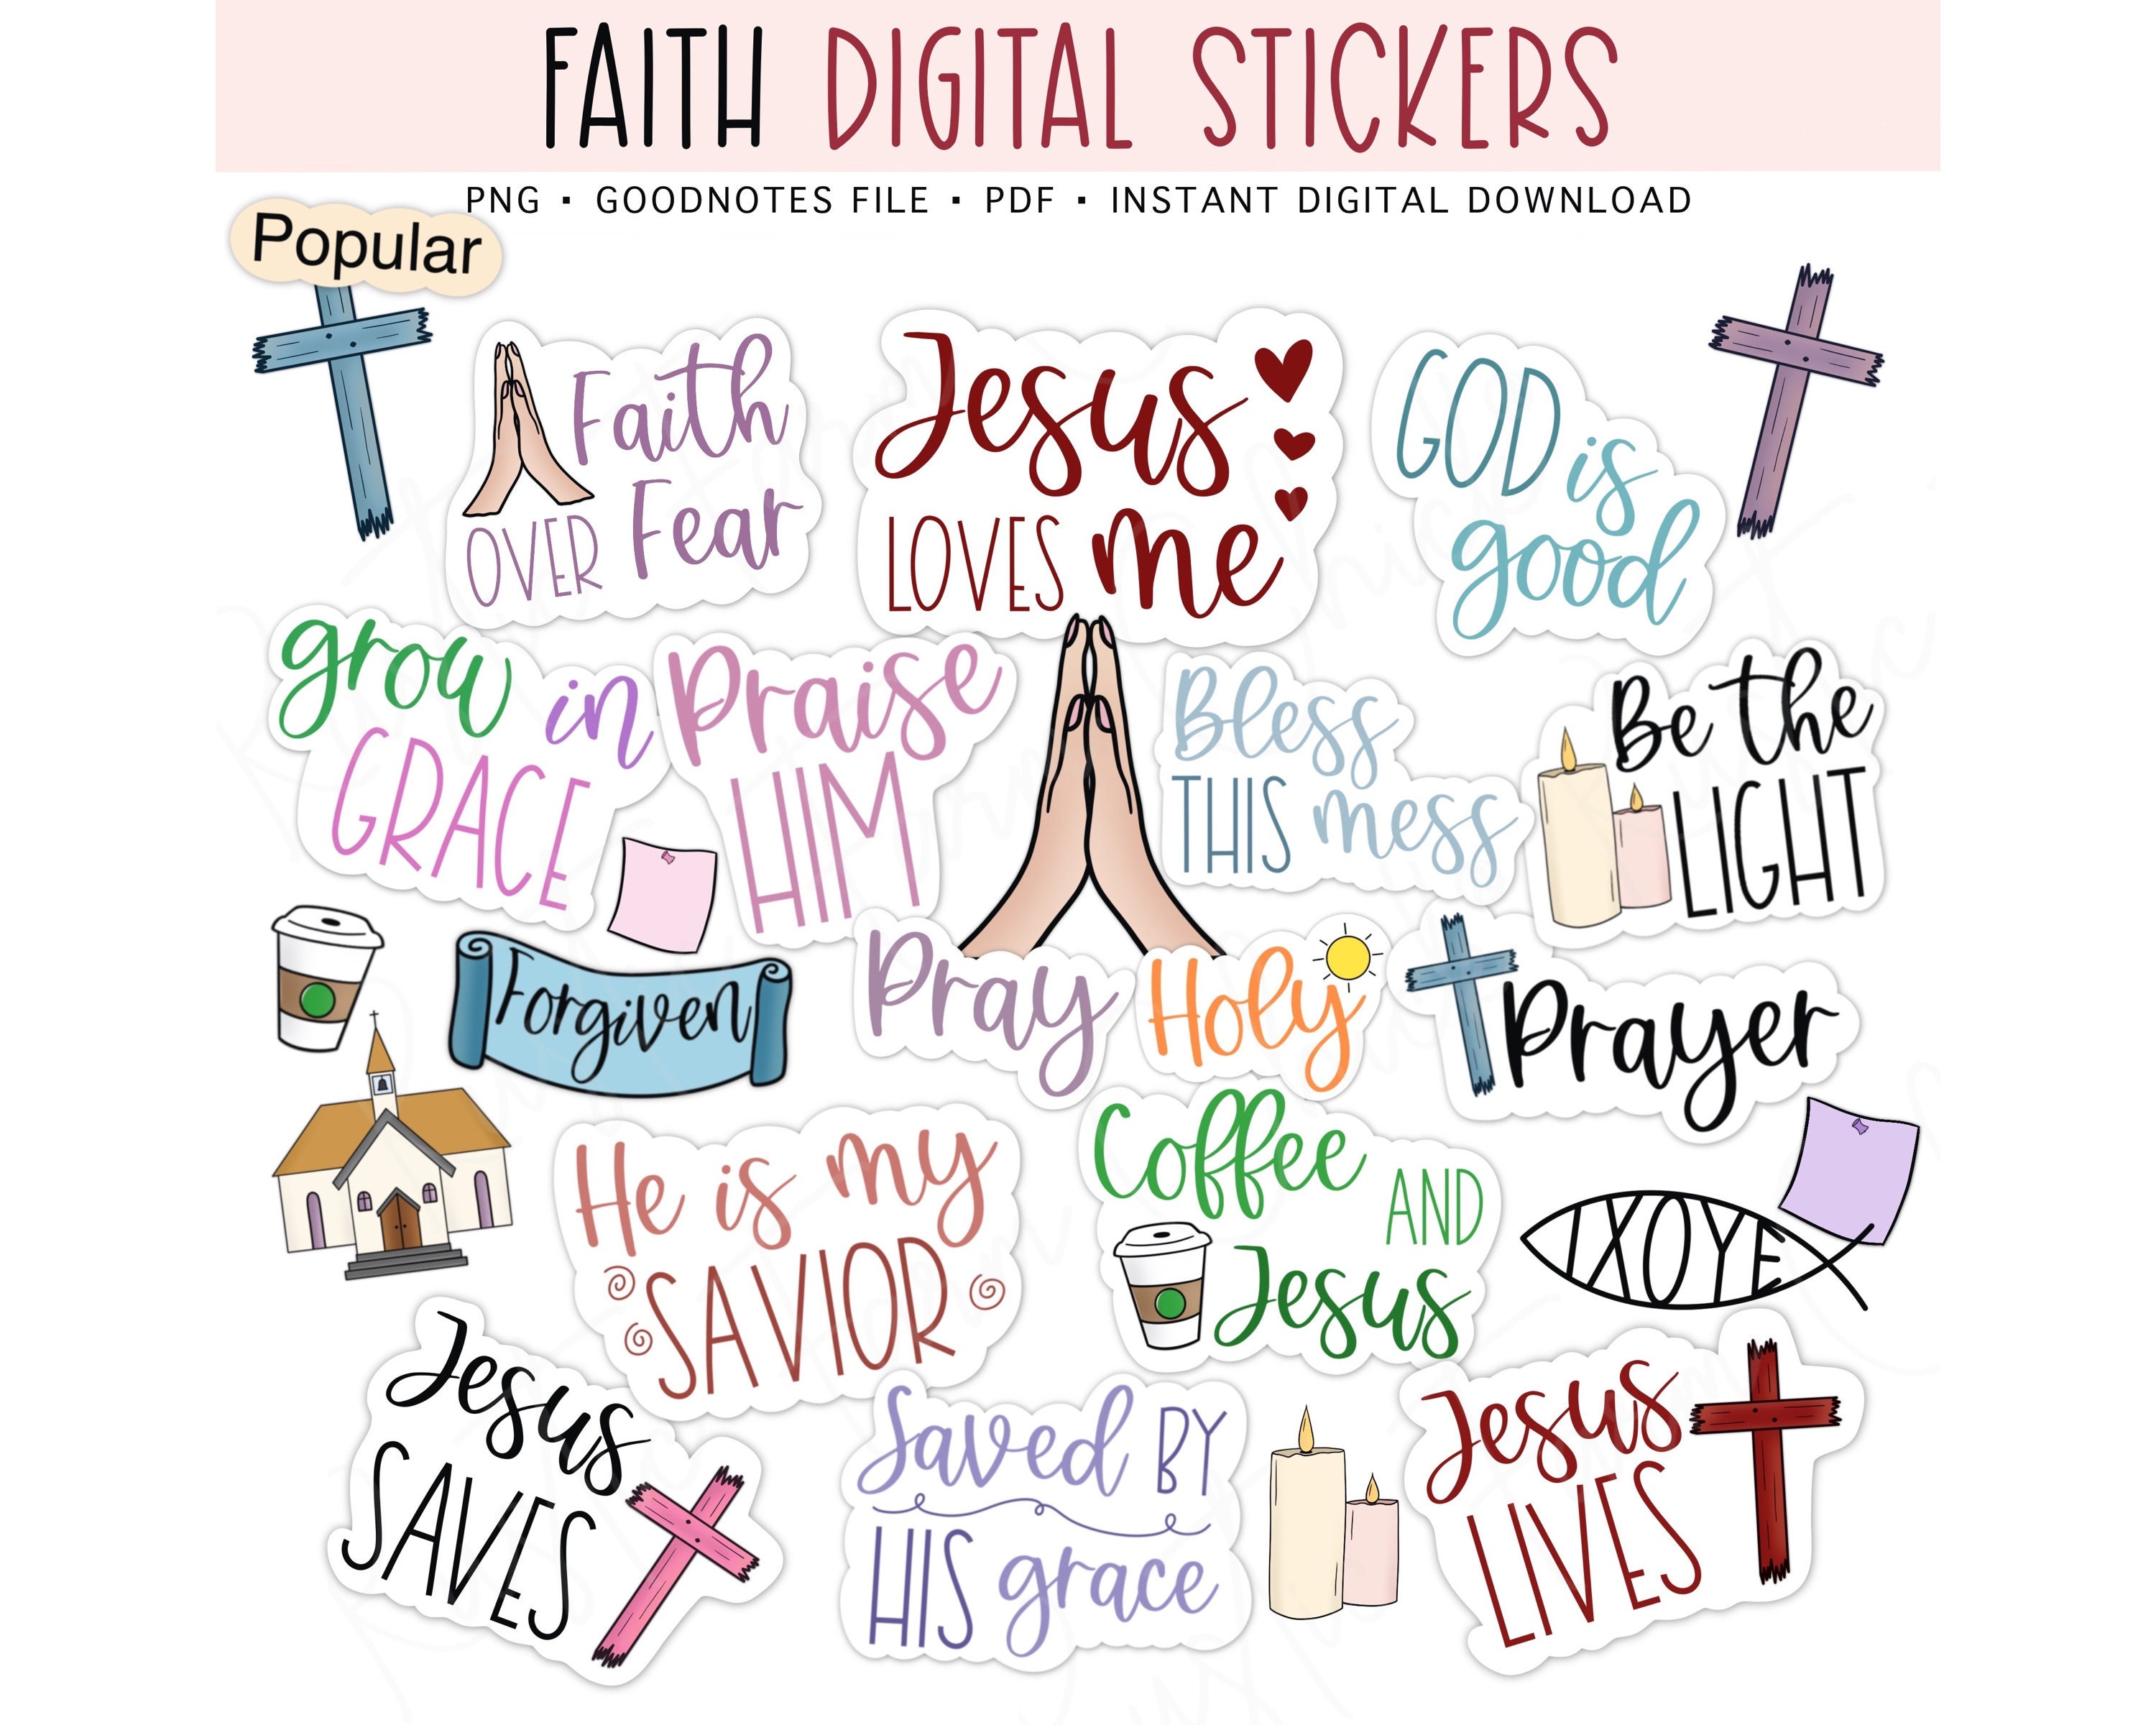 Christian Sticker Bundle, Religious Printable Stickers Bundle, Bible Quote  Stickers, DIY Laptop Decal, Print & Cut Bible Stickers 